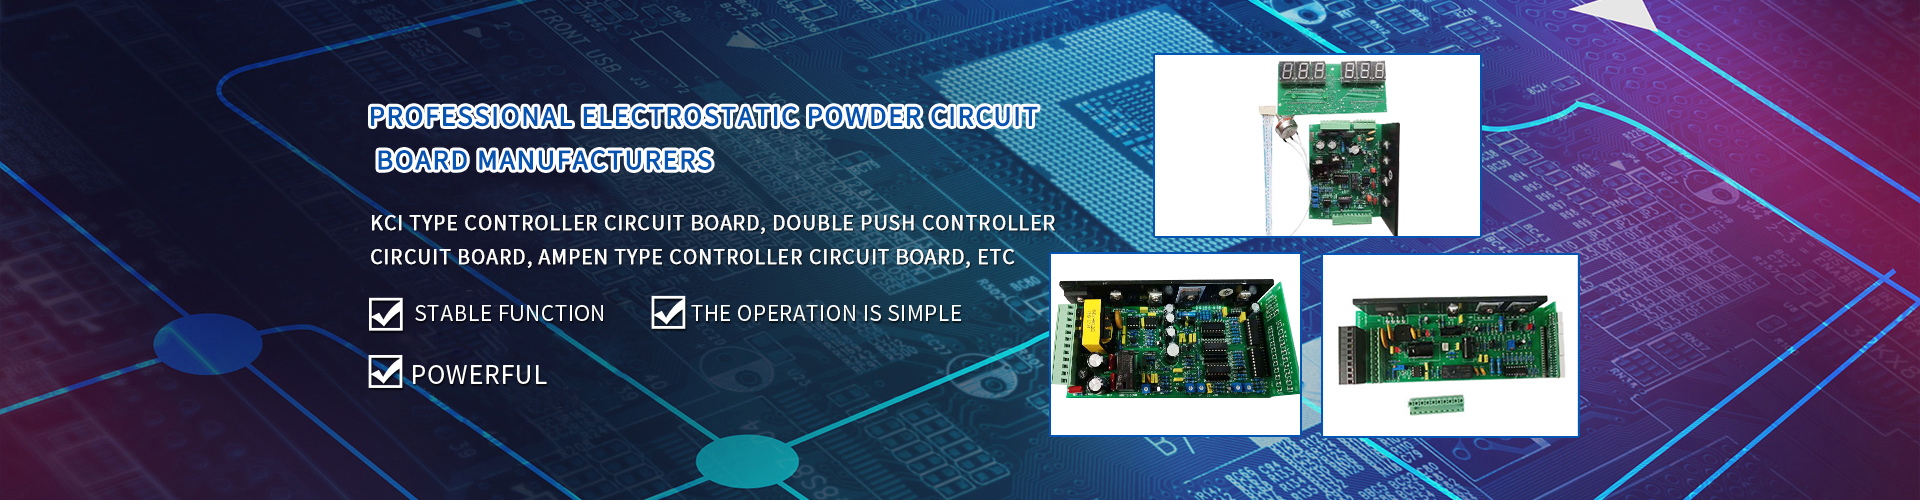 Electrostatic Powder Circuit Board